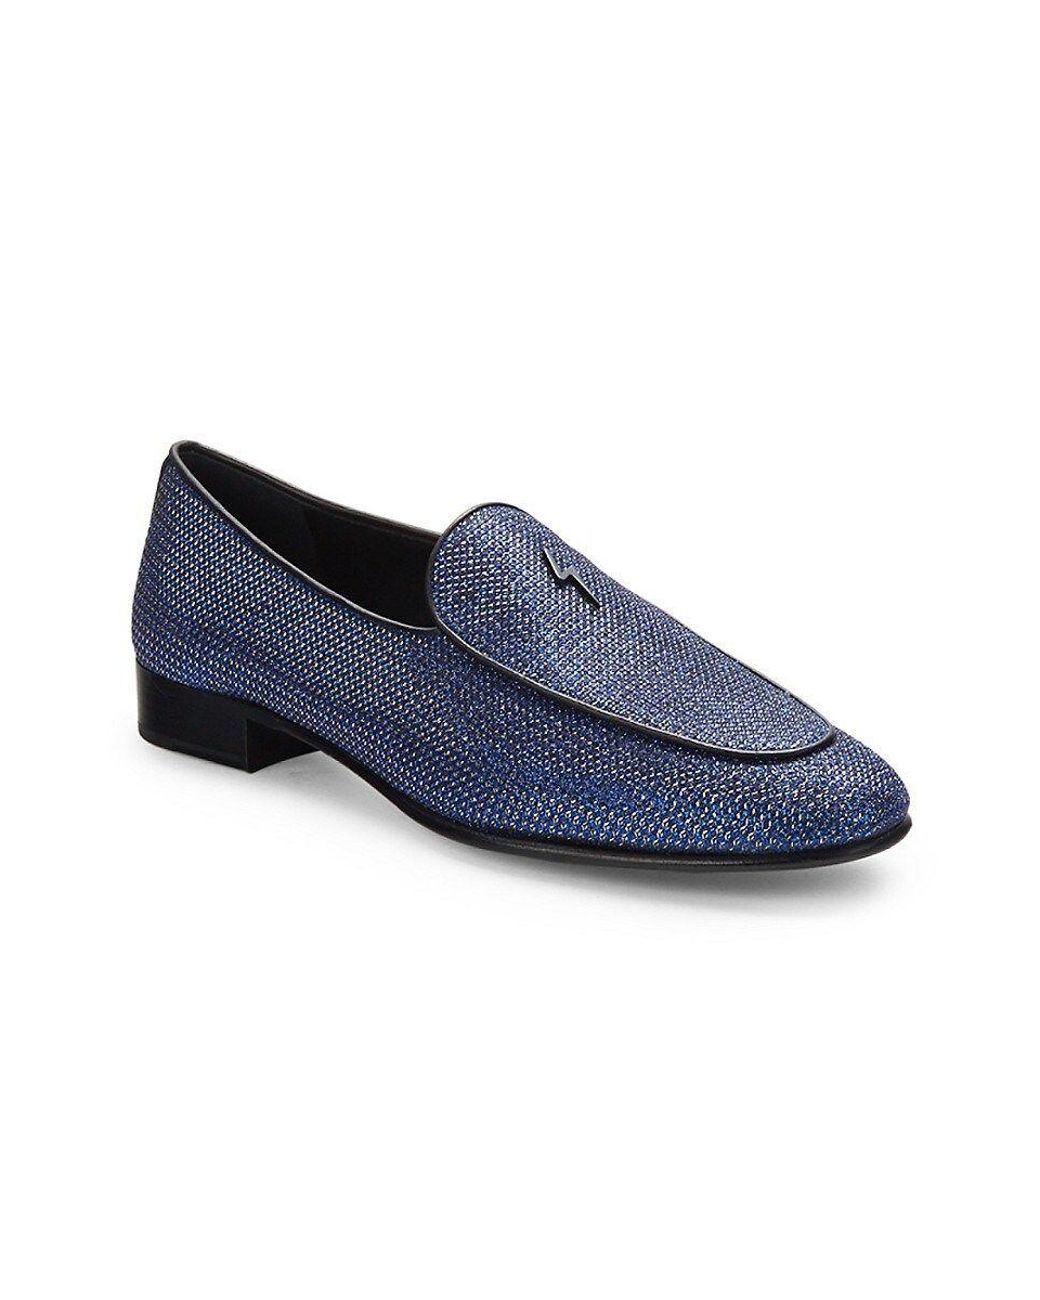 Giuseppe Zanotti Trading Logo Loafers in Blue | Lyst